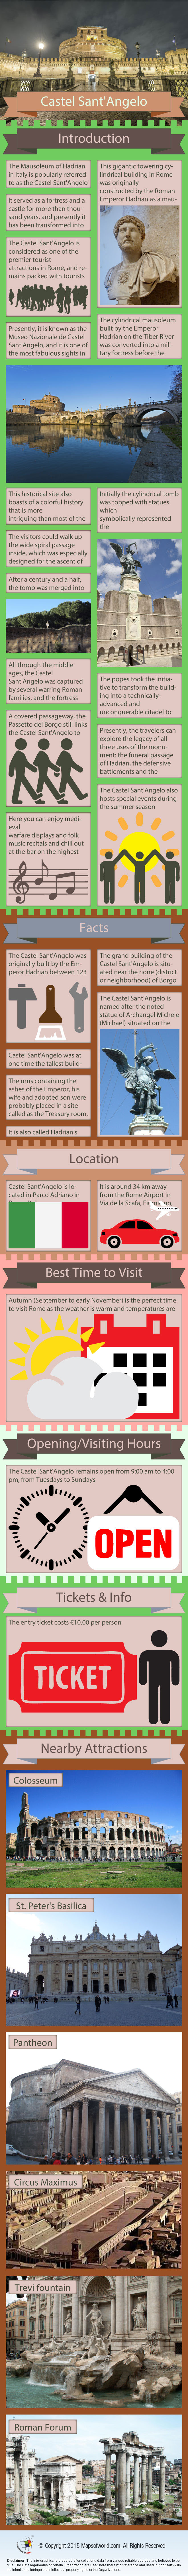 Castel Sant’Angelo Infographic